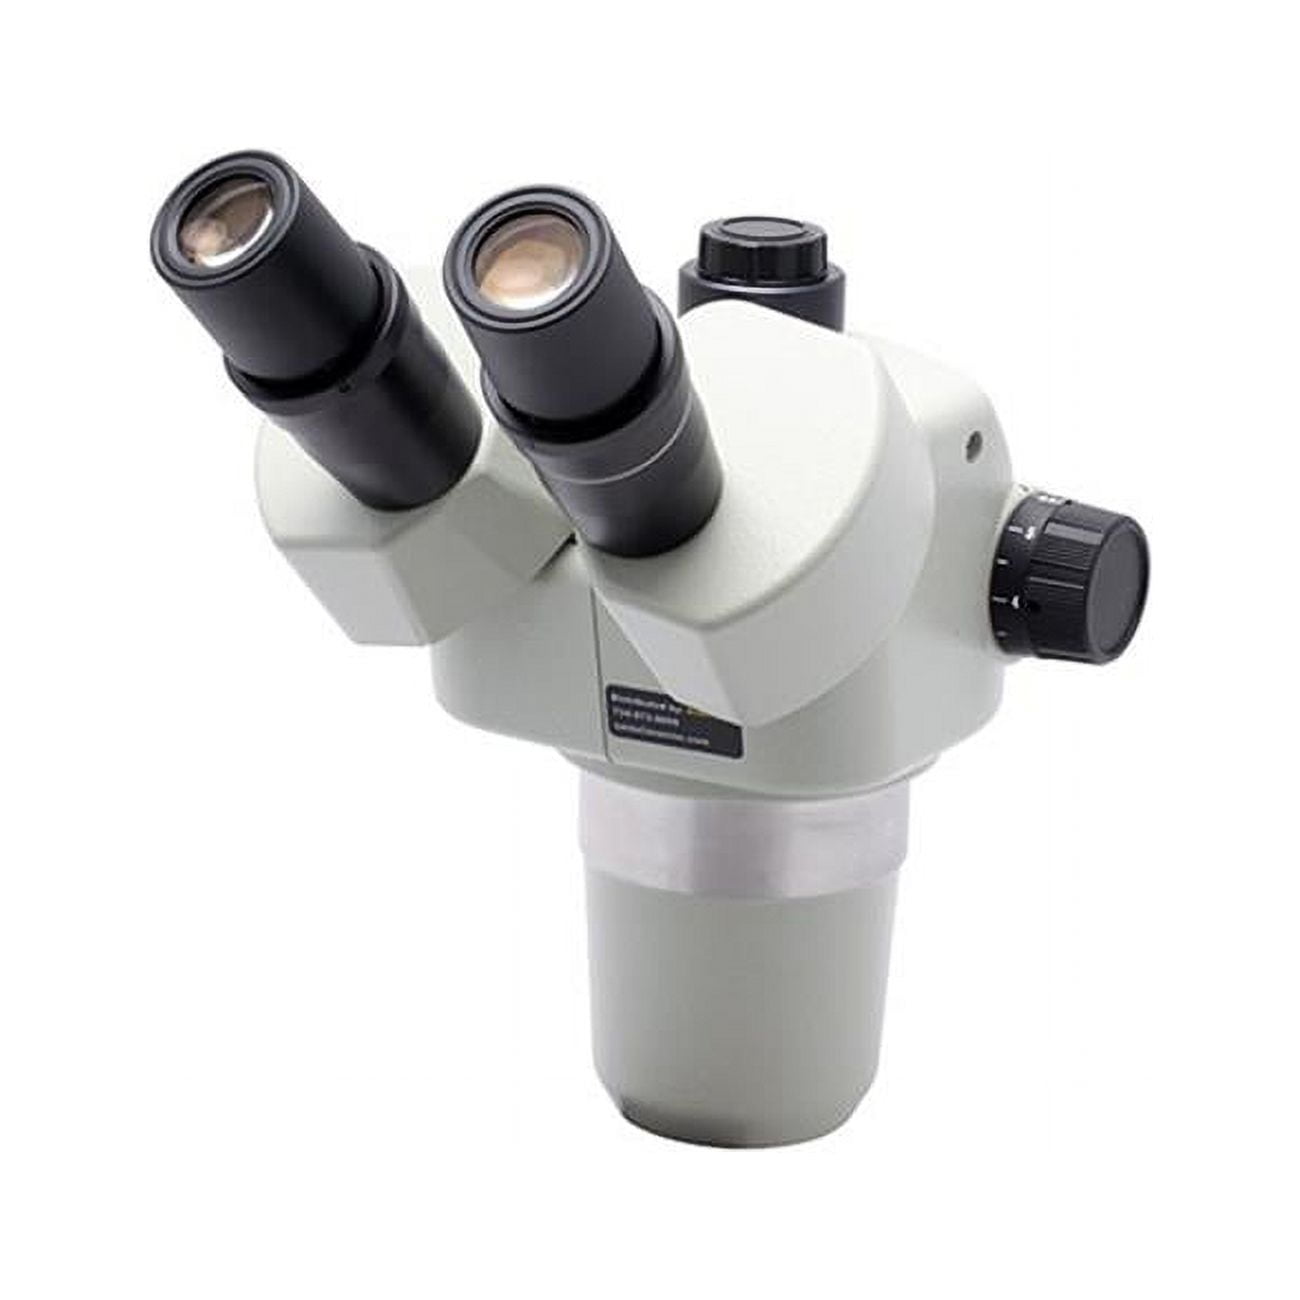 Picture of Aven SPZV-50 True Trinocular Stereo Zoom Microscope